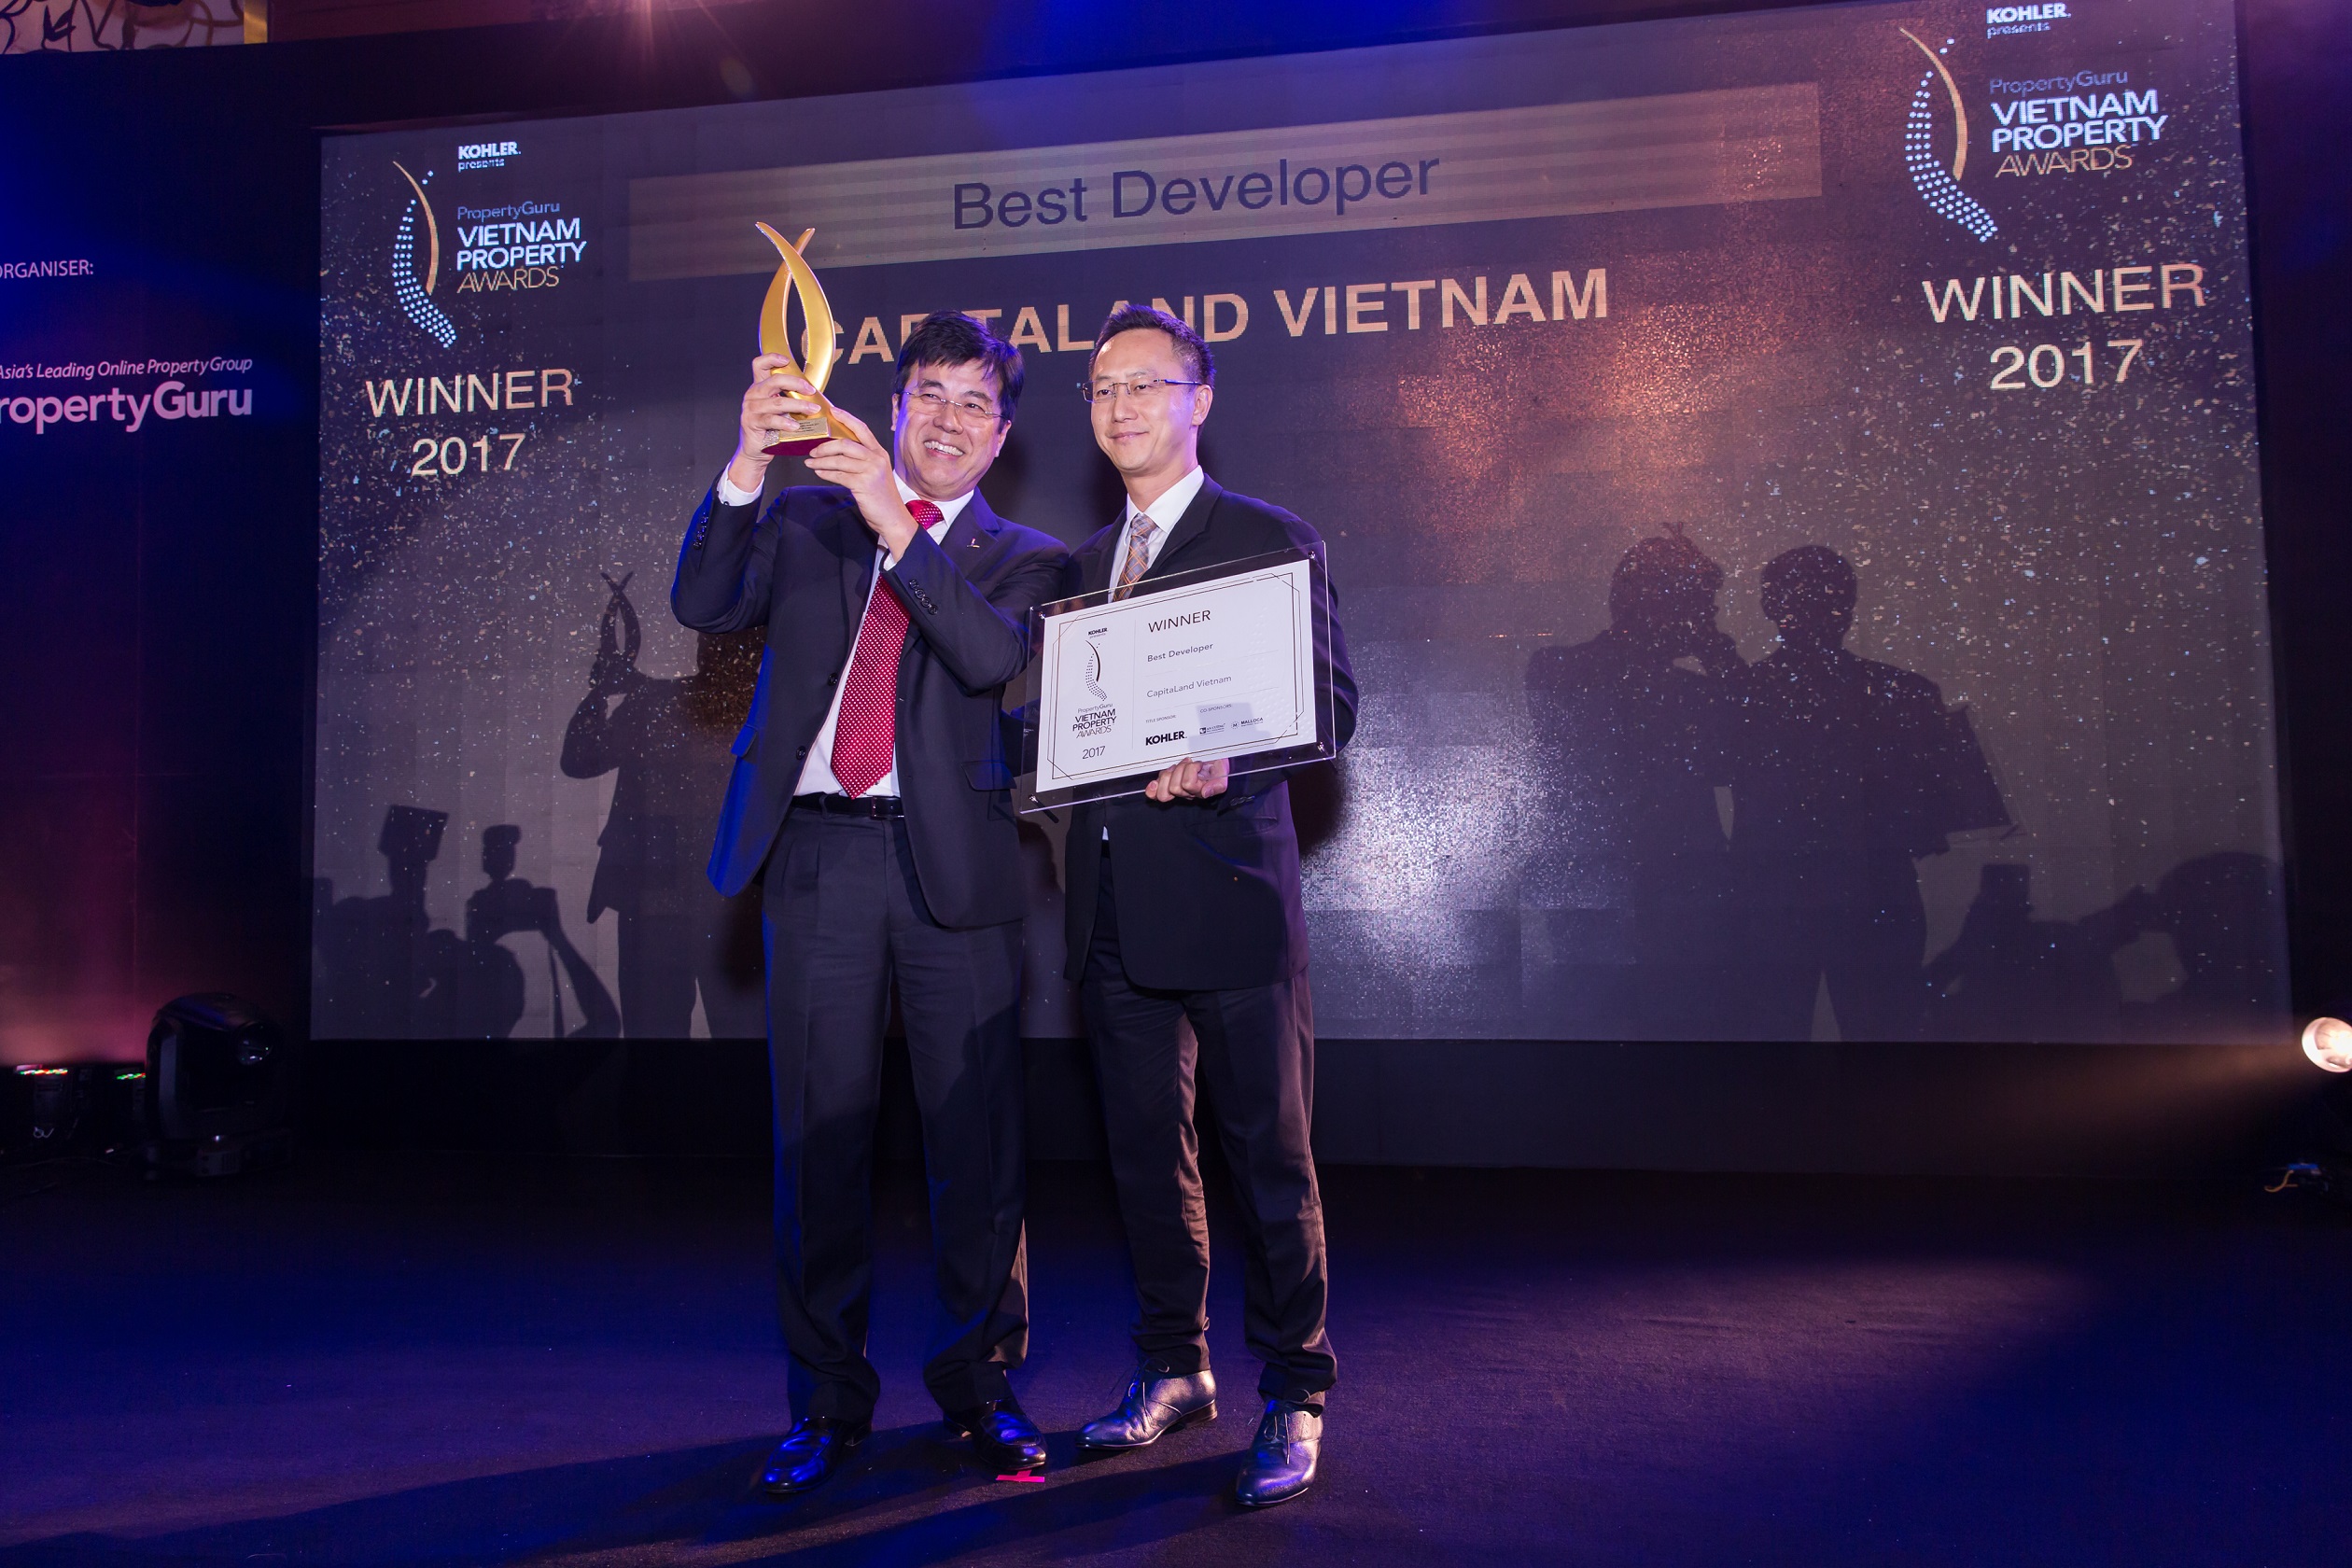 capitaland breaks 22 year record with 11 vietnam property awards